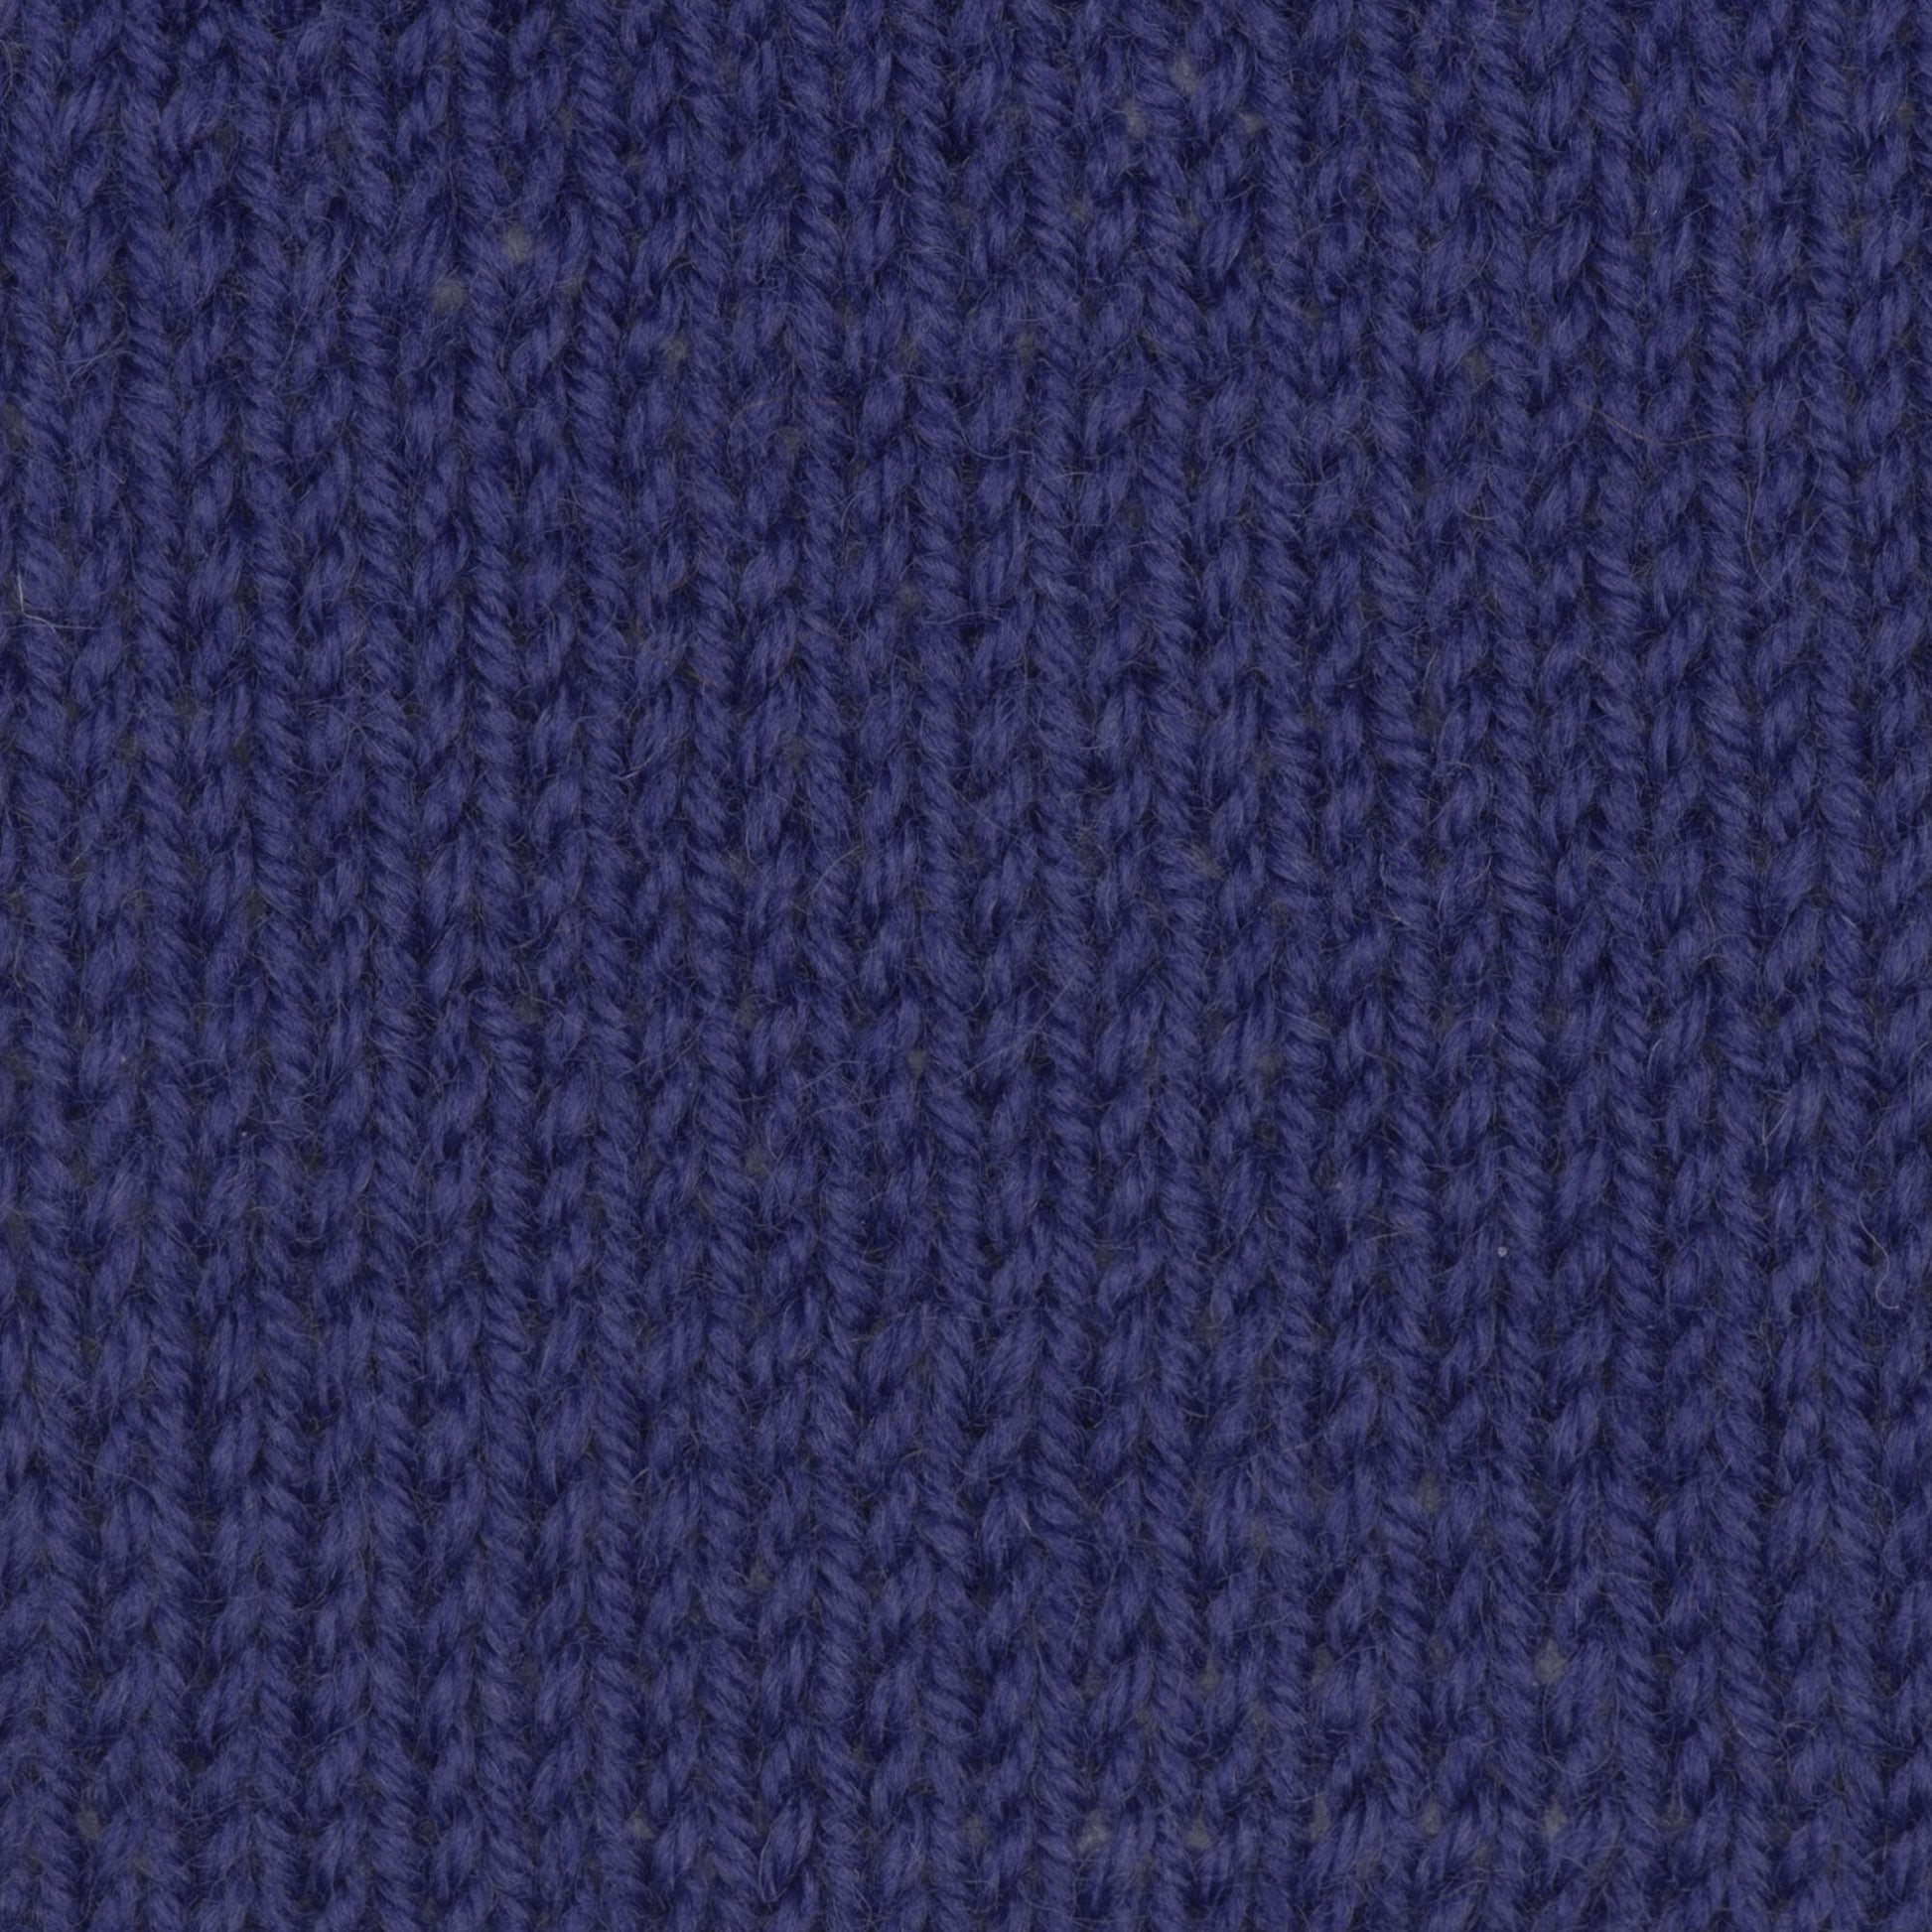 Patons Classic Wool DK Superwash Yarn - Discontinued Shades